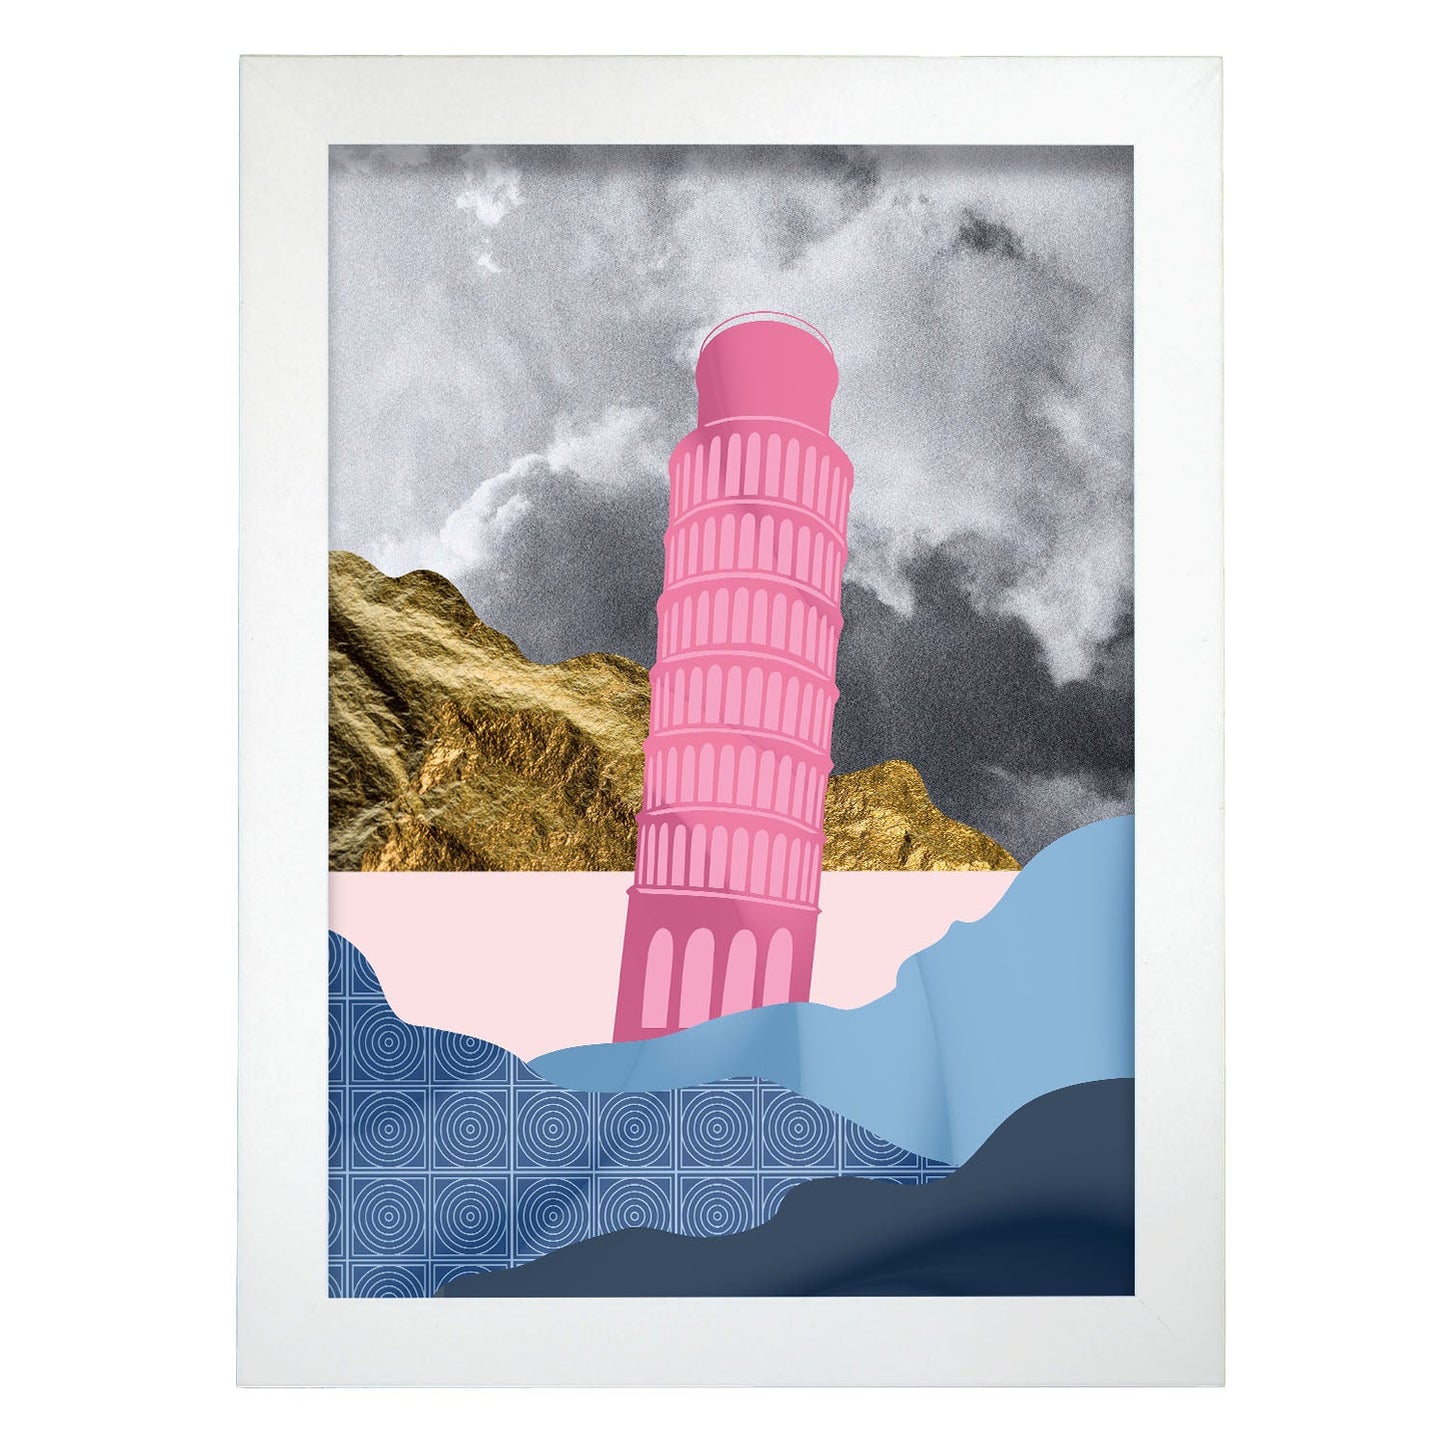 Leaning Tower of Pisa-Artwork-Nacnic-A4-Marco Blanco-Nacnic Estudio SL